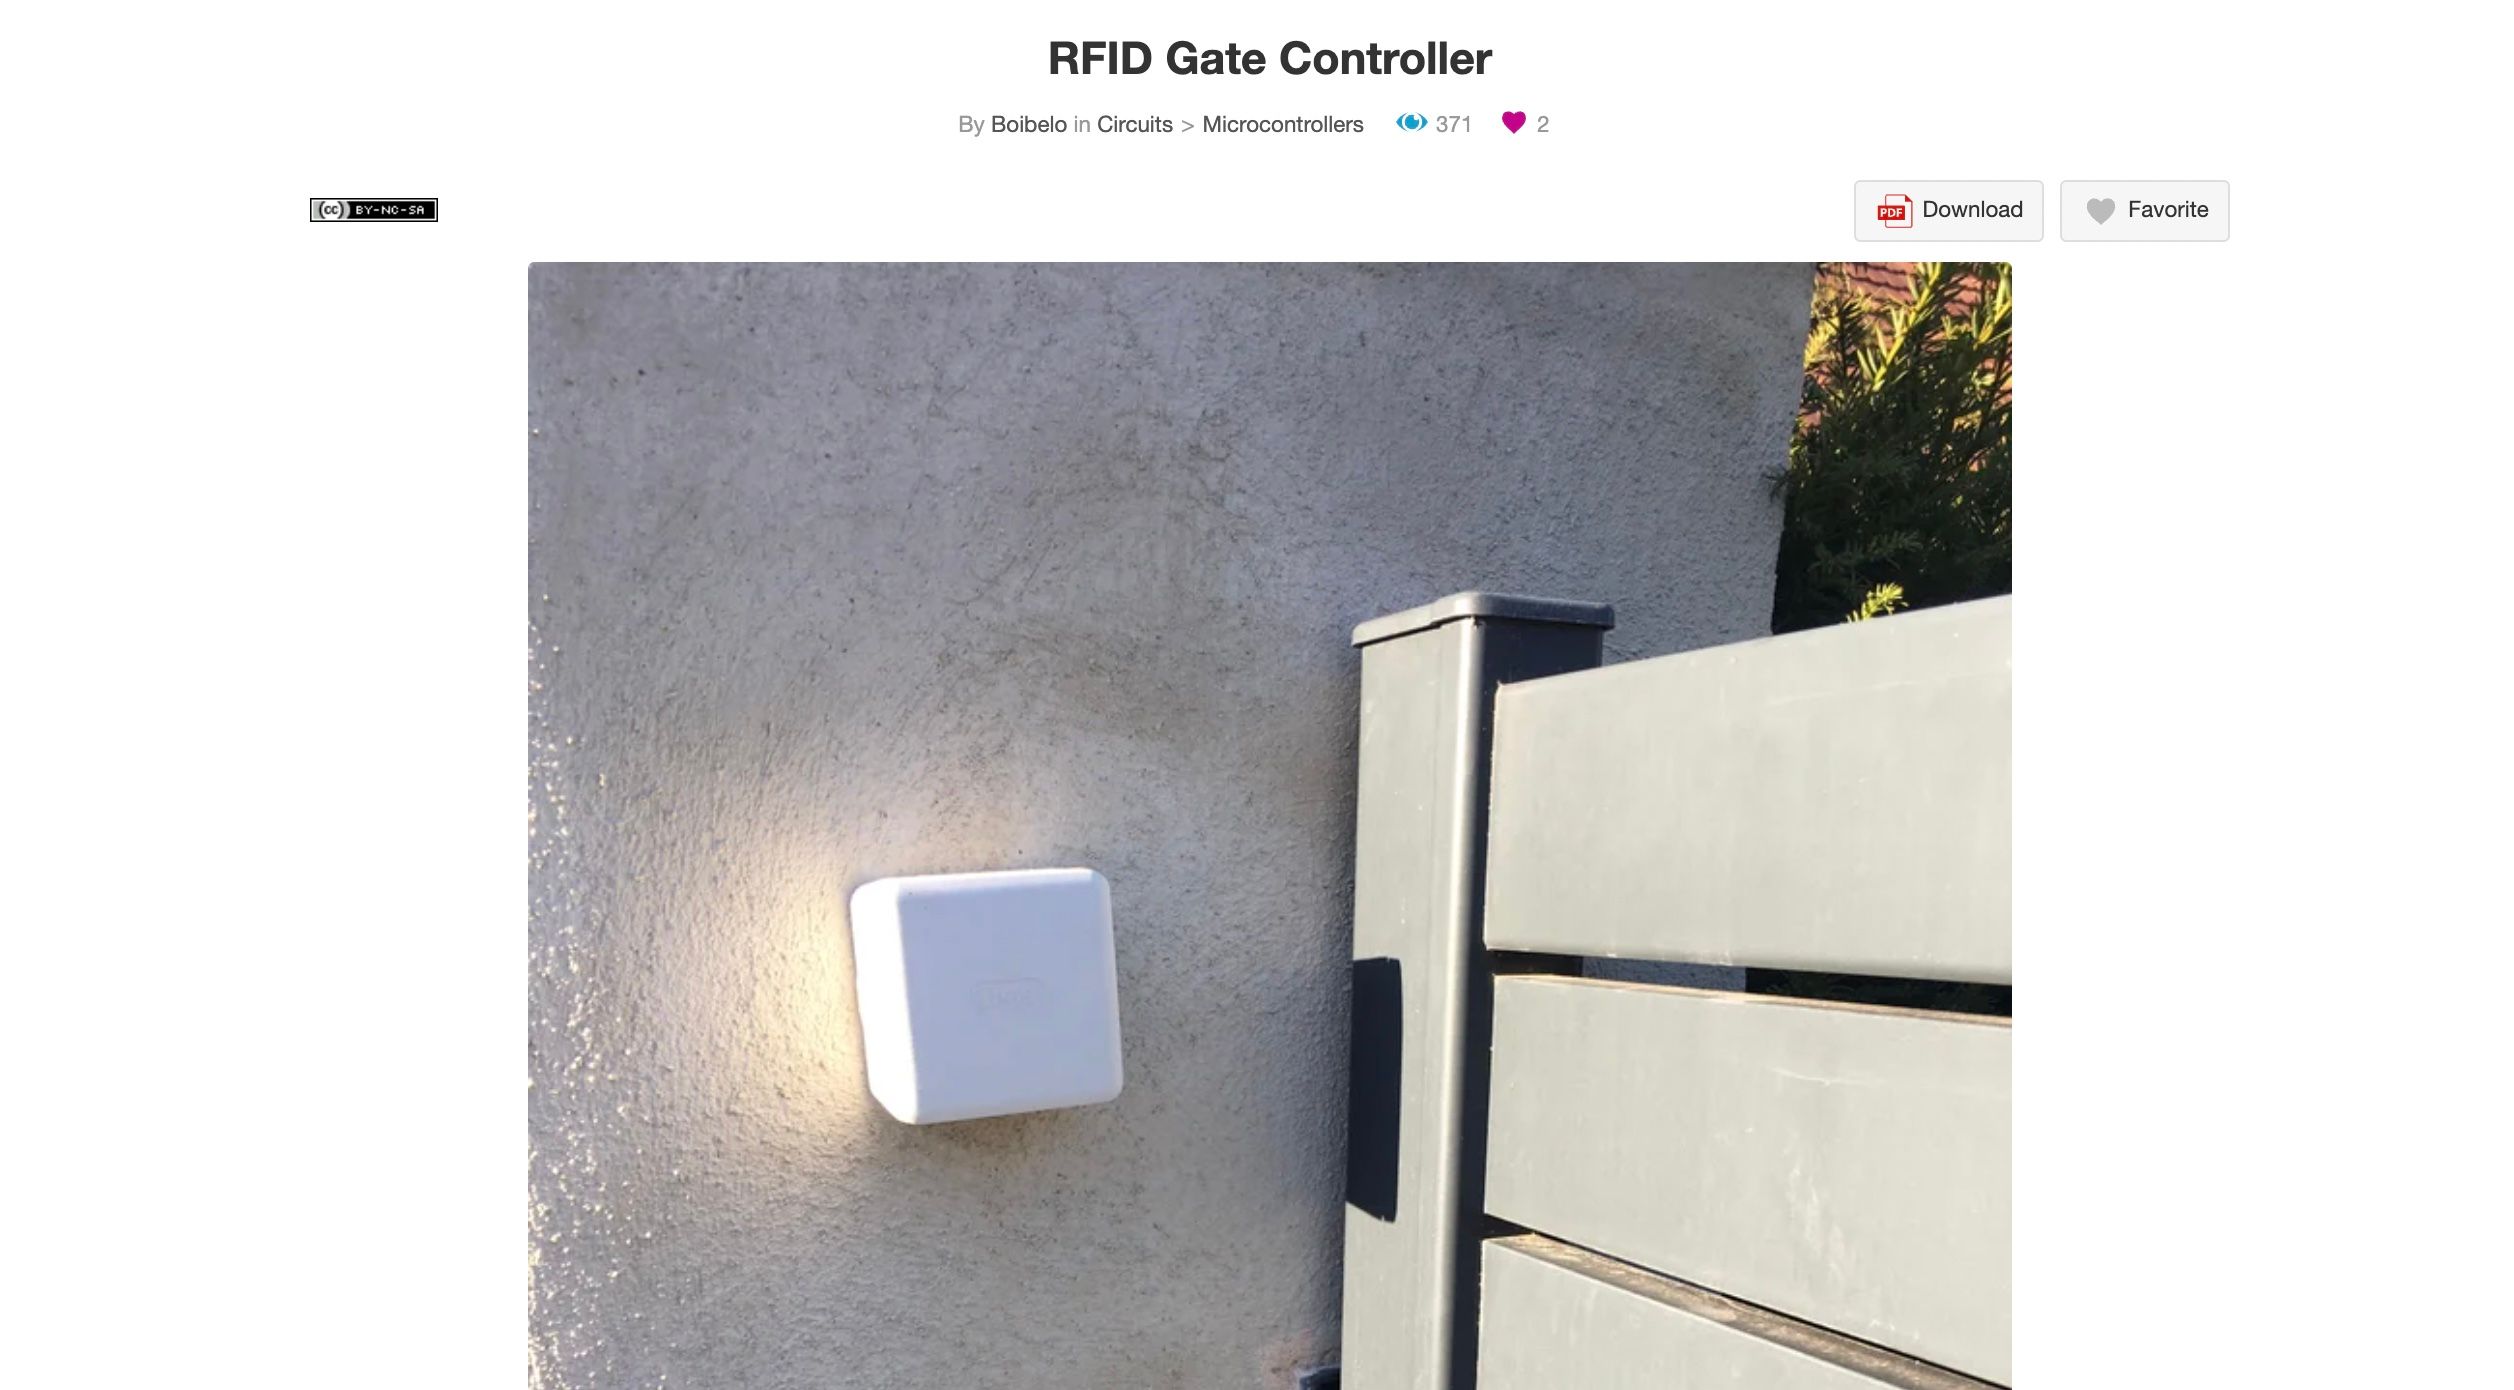 RFID gate controller